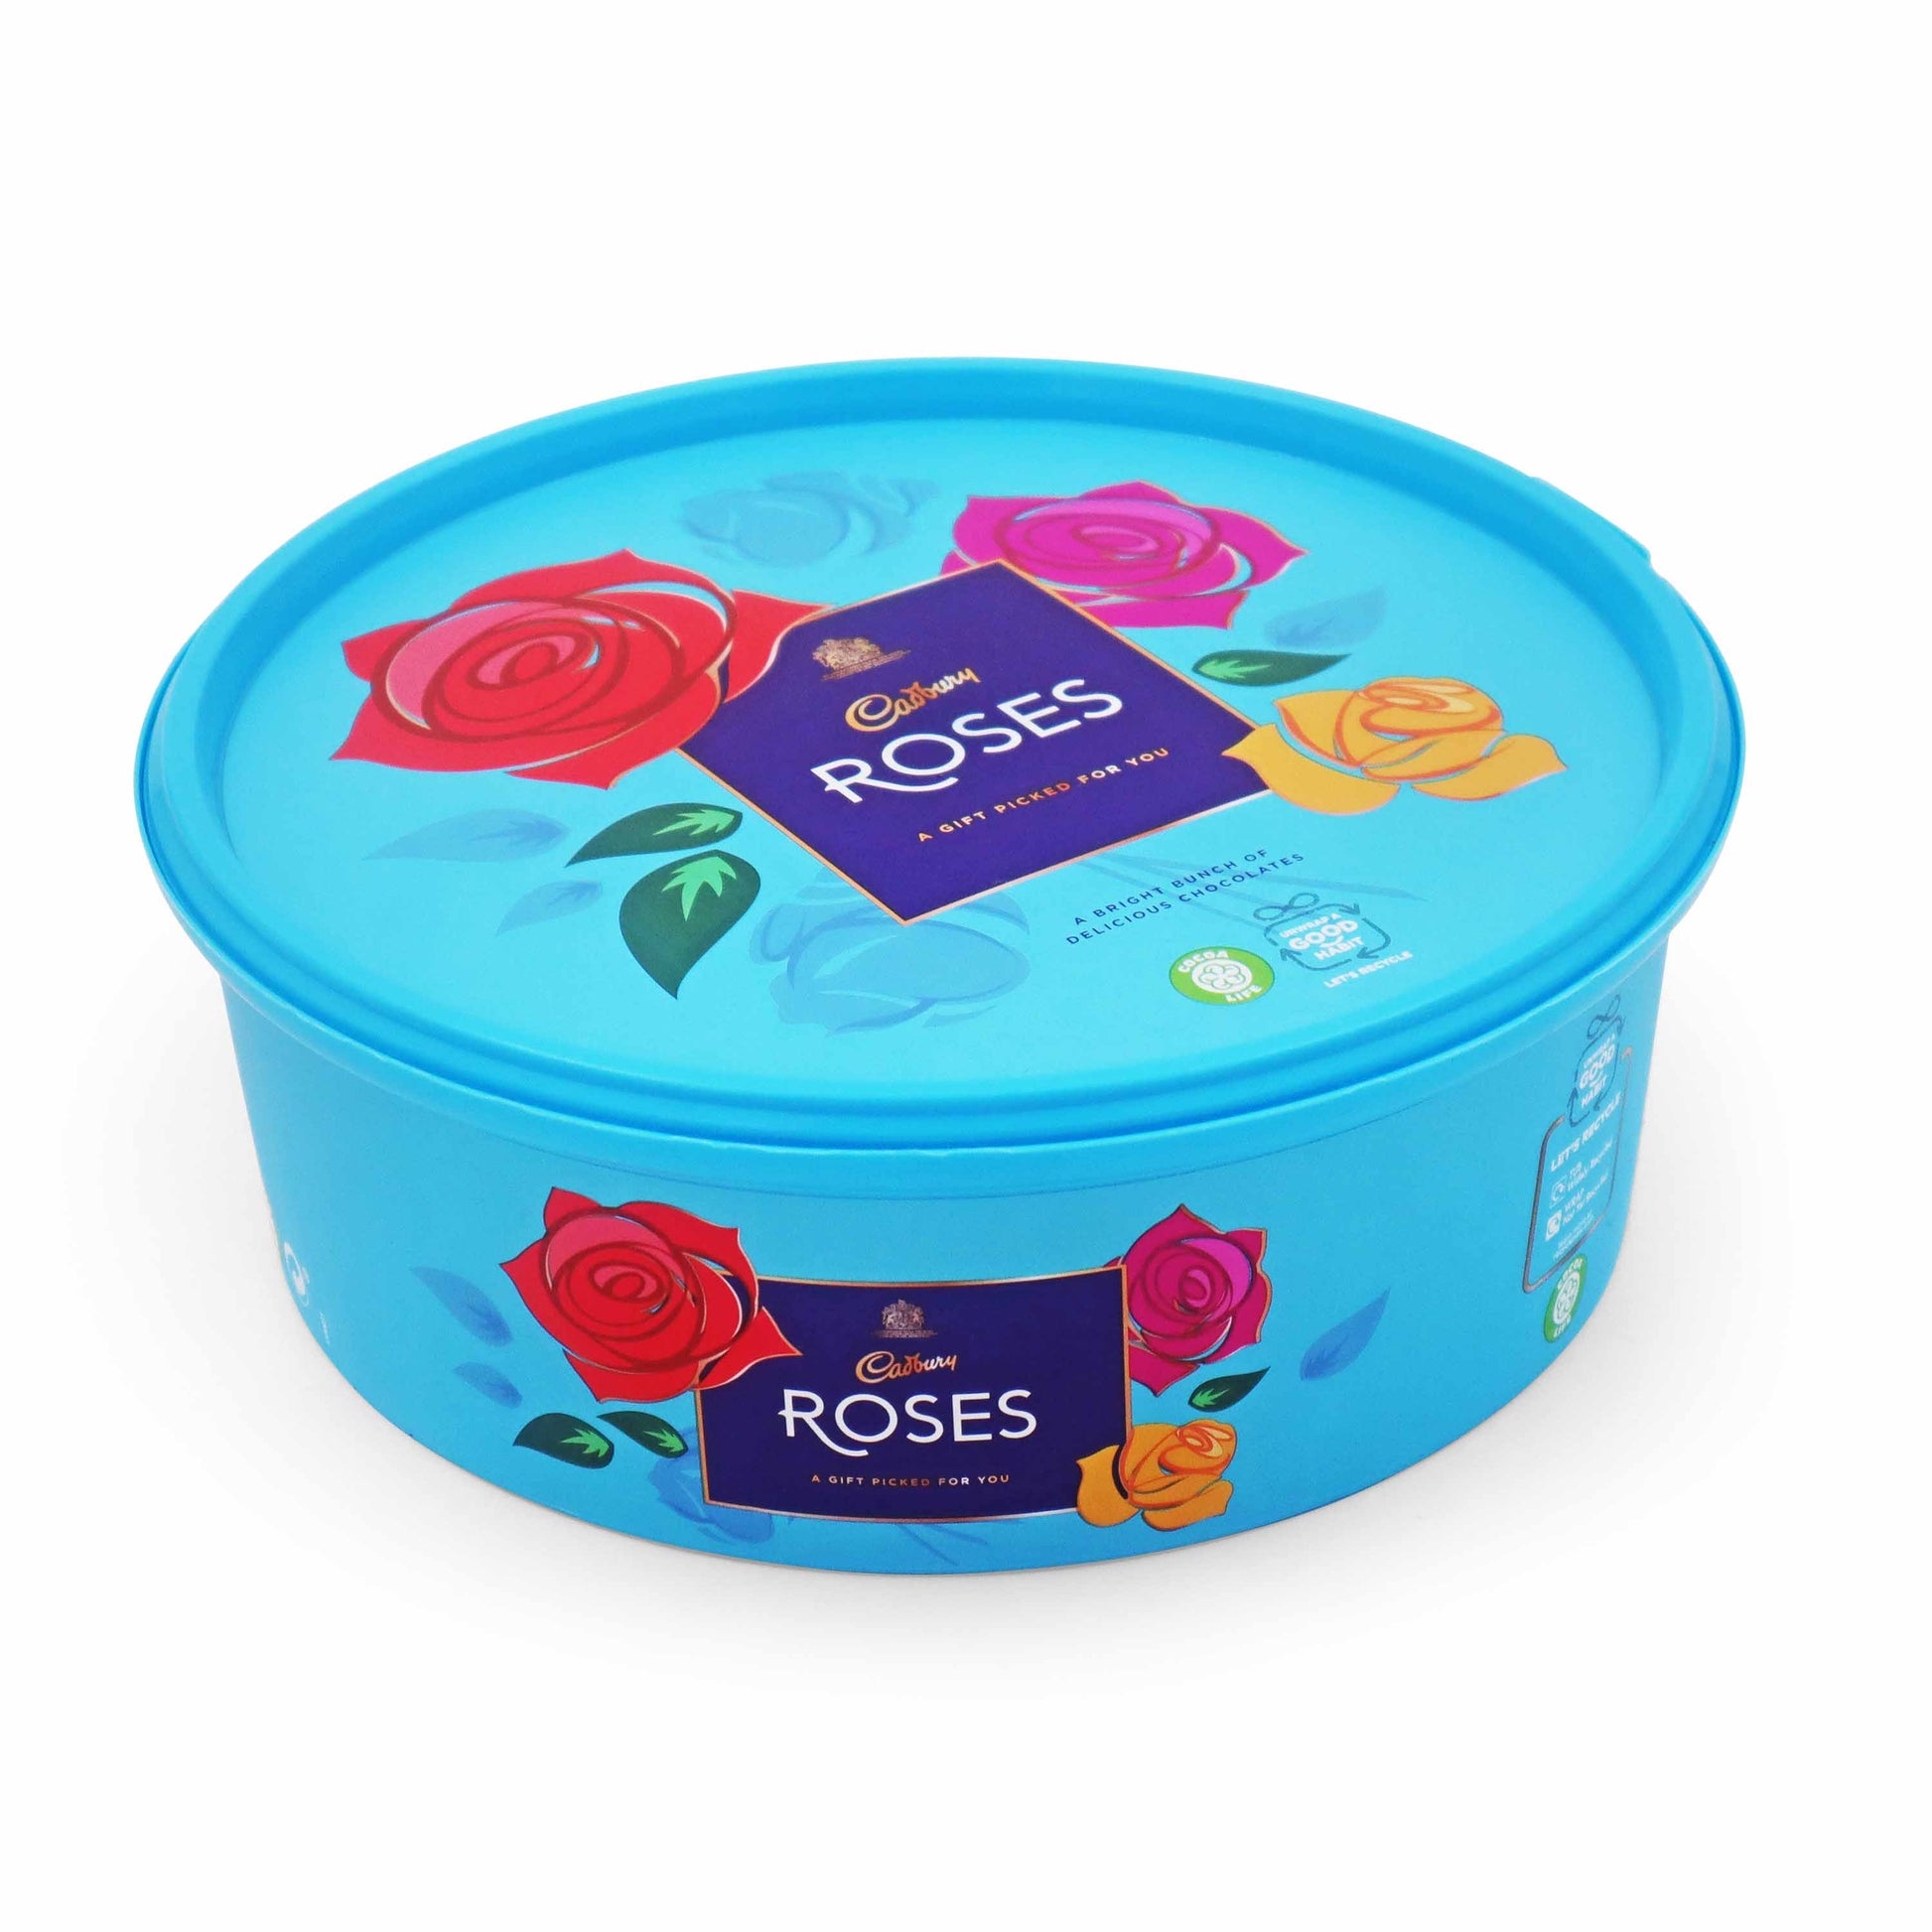 Cadbury Roses Tub 550g - Chocolate Gift Set - Gift Box